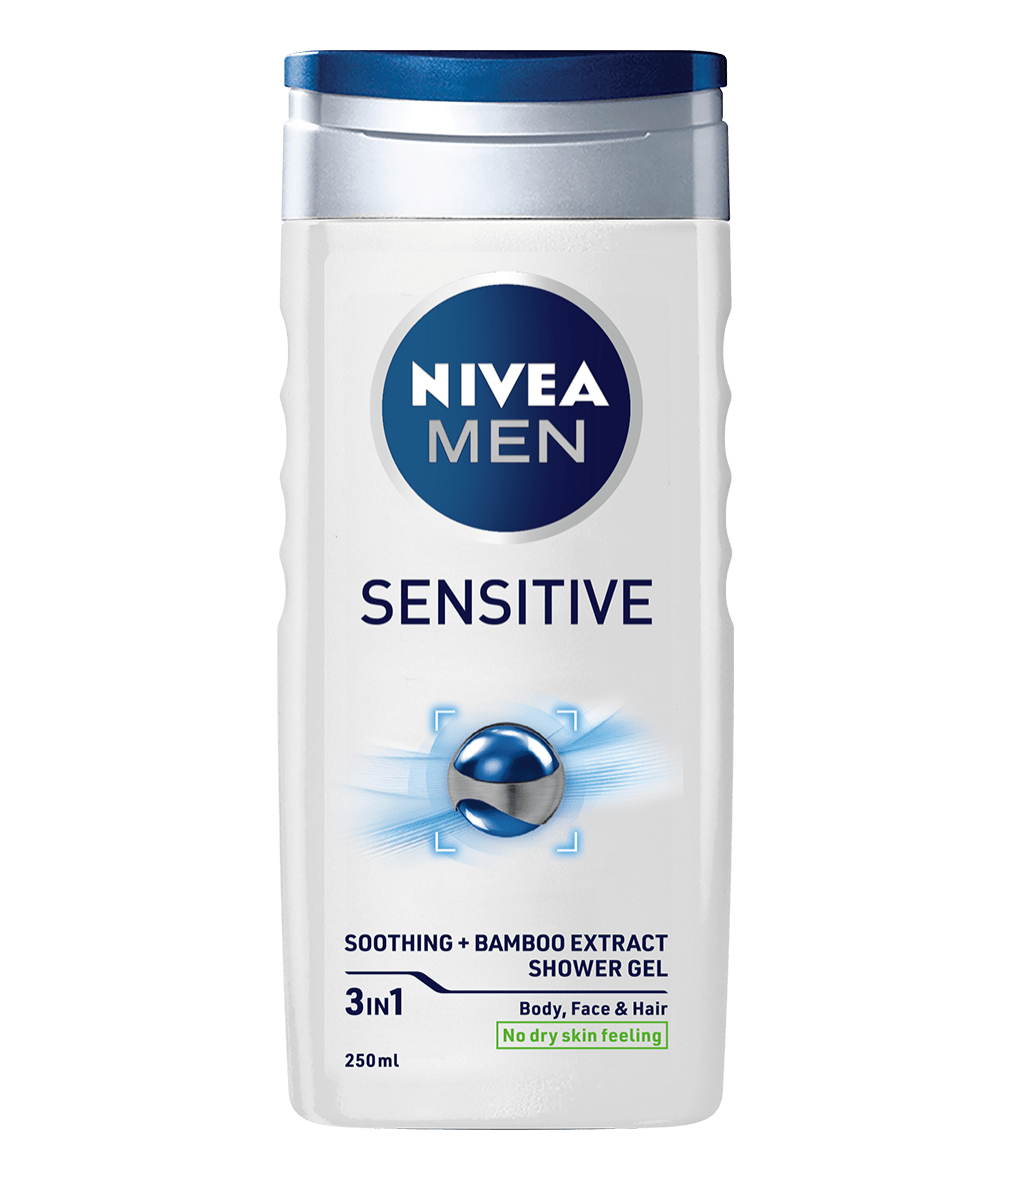 81079 Nivea Men Sensitive shower gel 250ml clean packshot